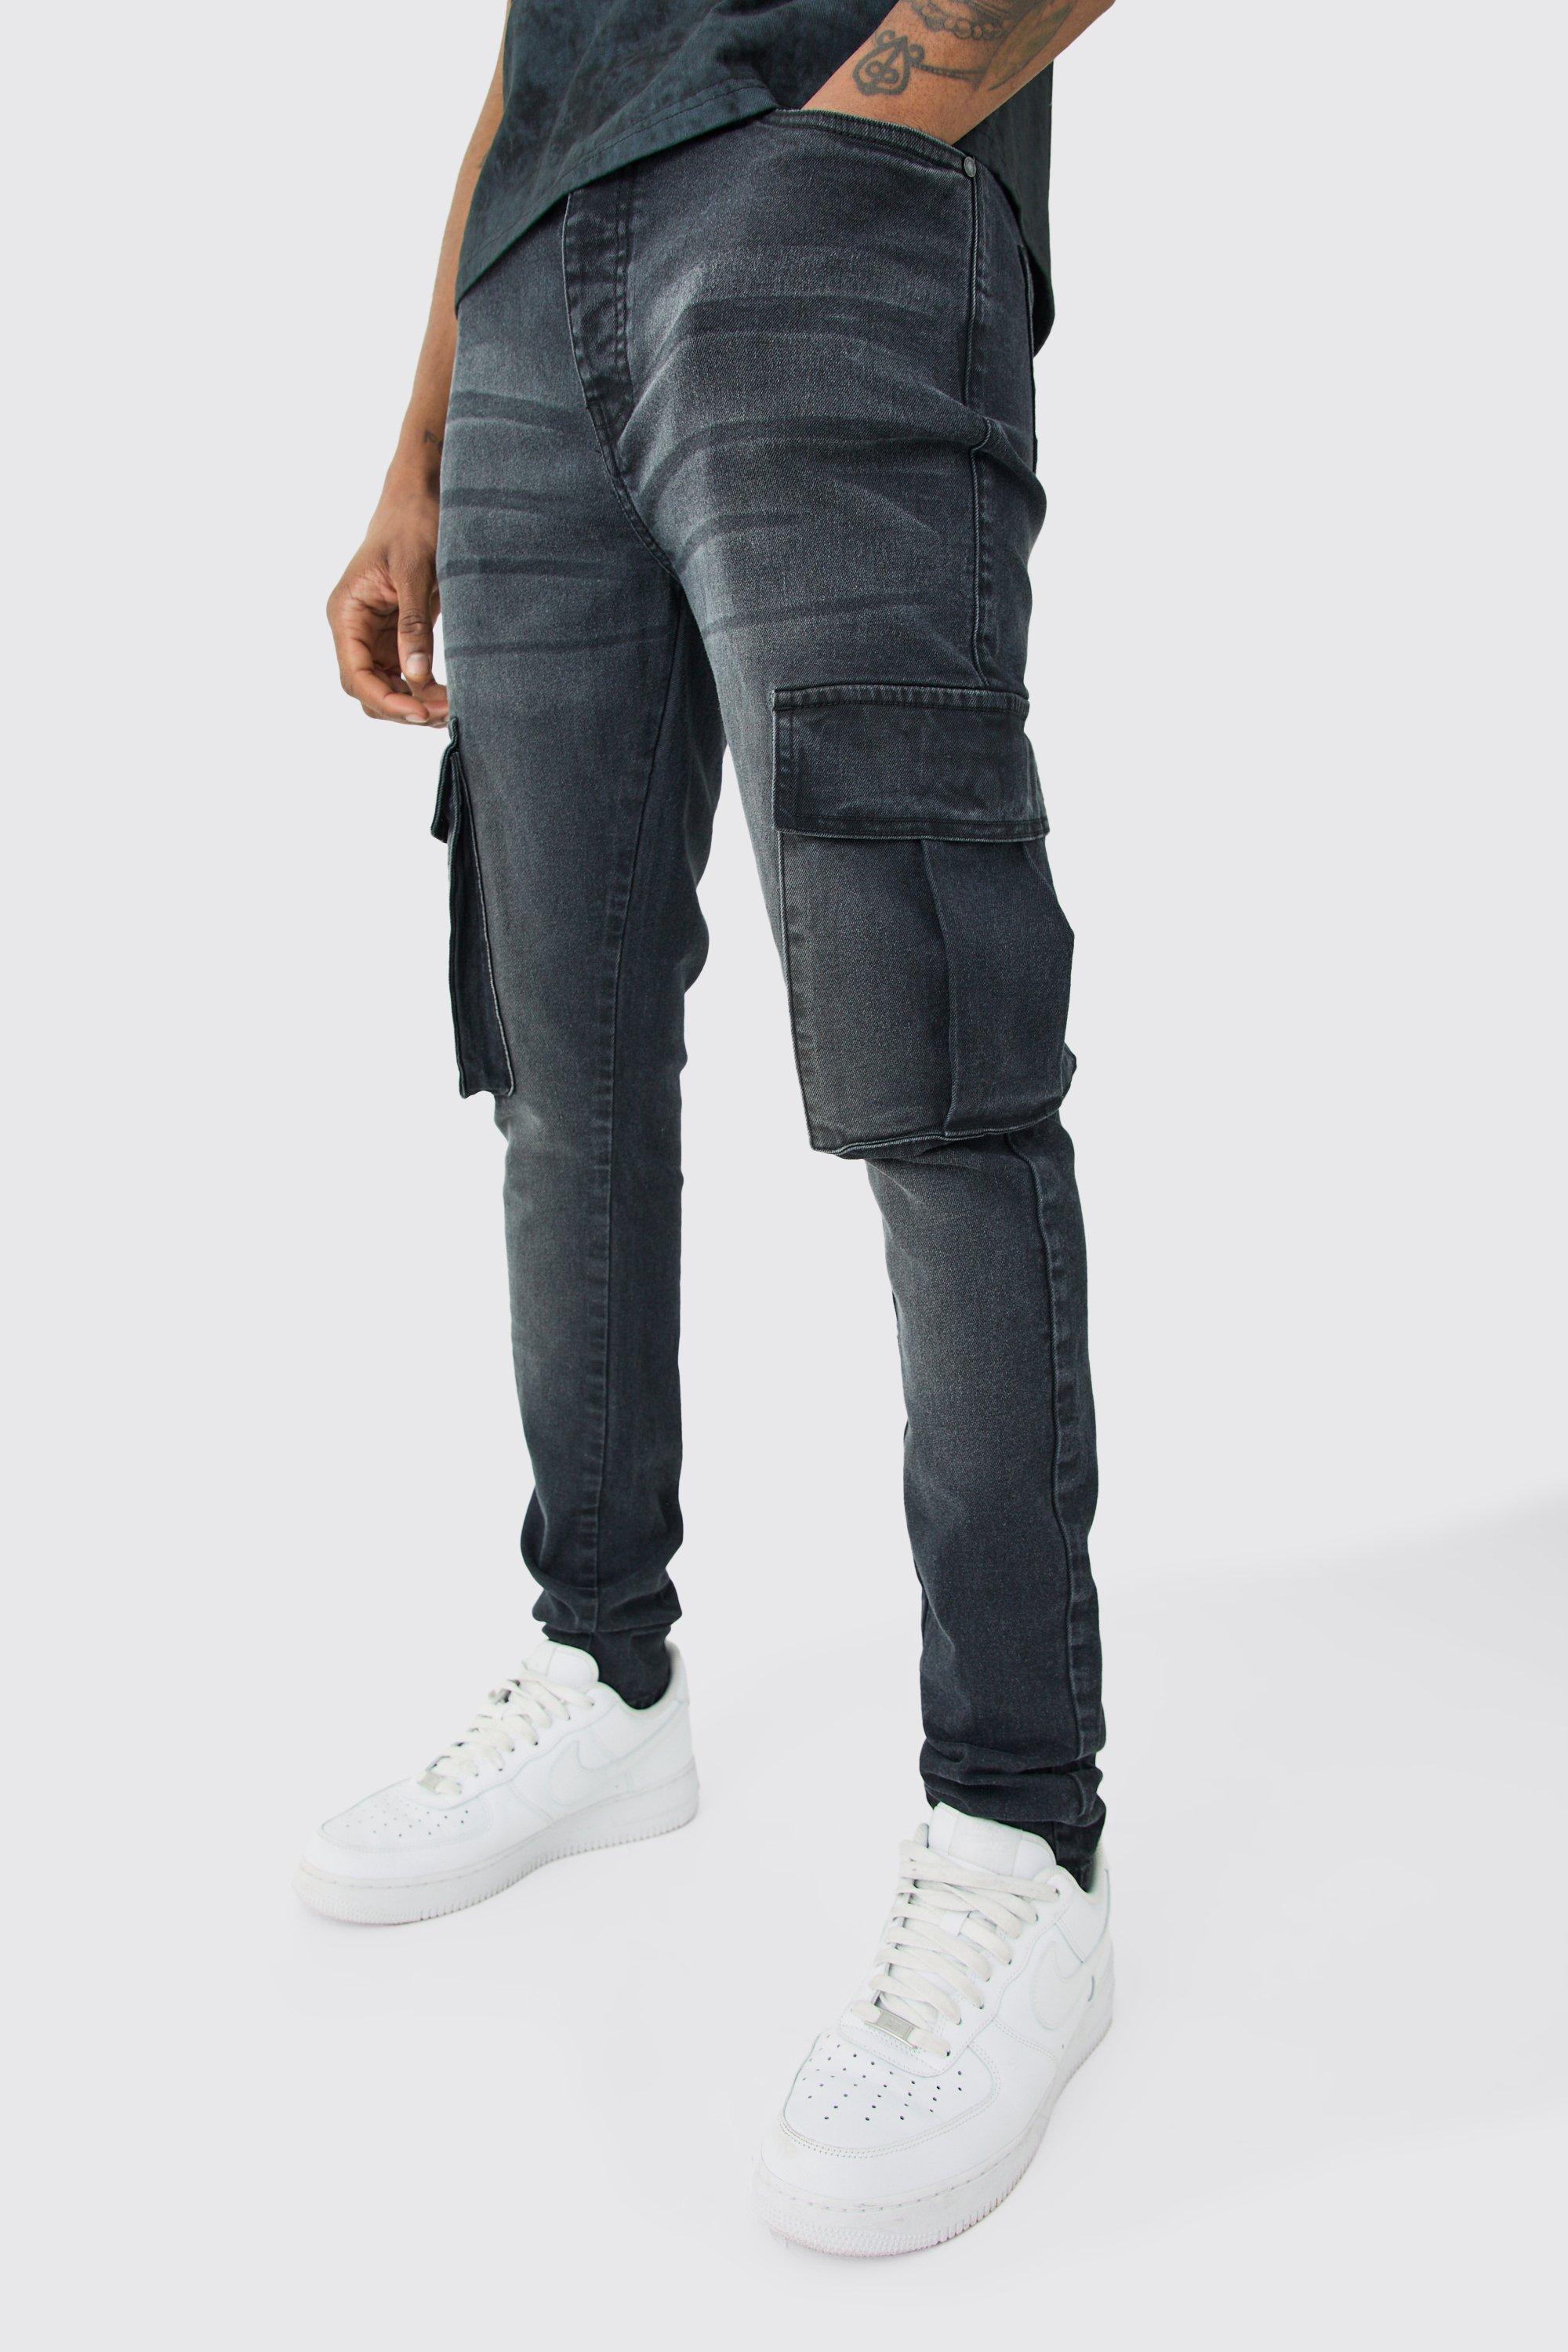 Boohoo Tall Super Skinny Cargo Jeans, Washed Black